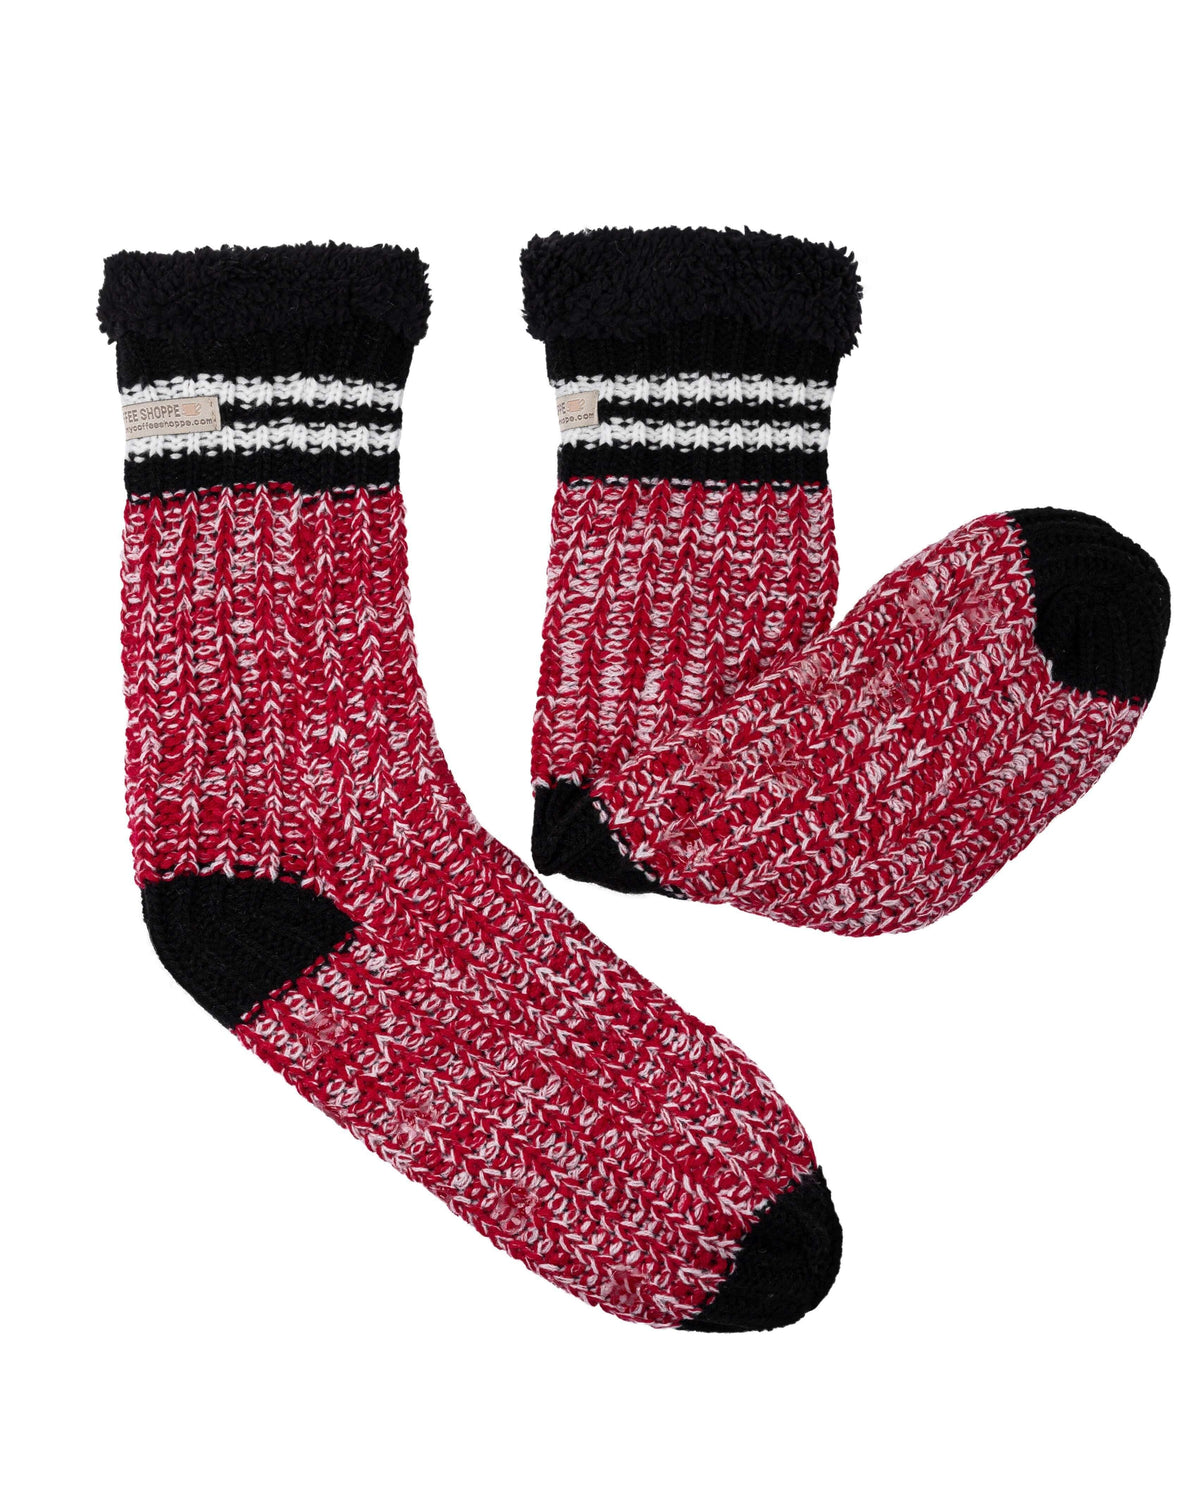 Canadiana Lounge Socks - Deep Red - LATTELOVE Co.